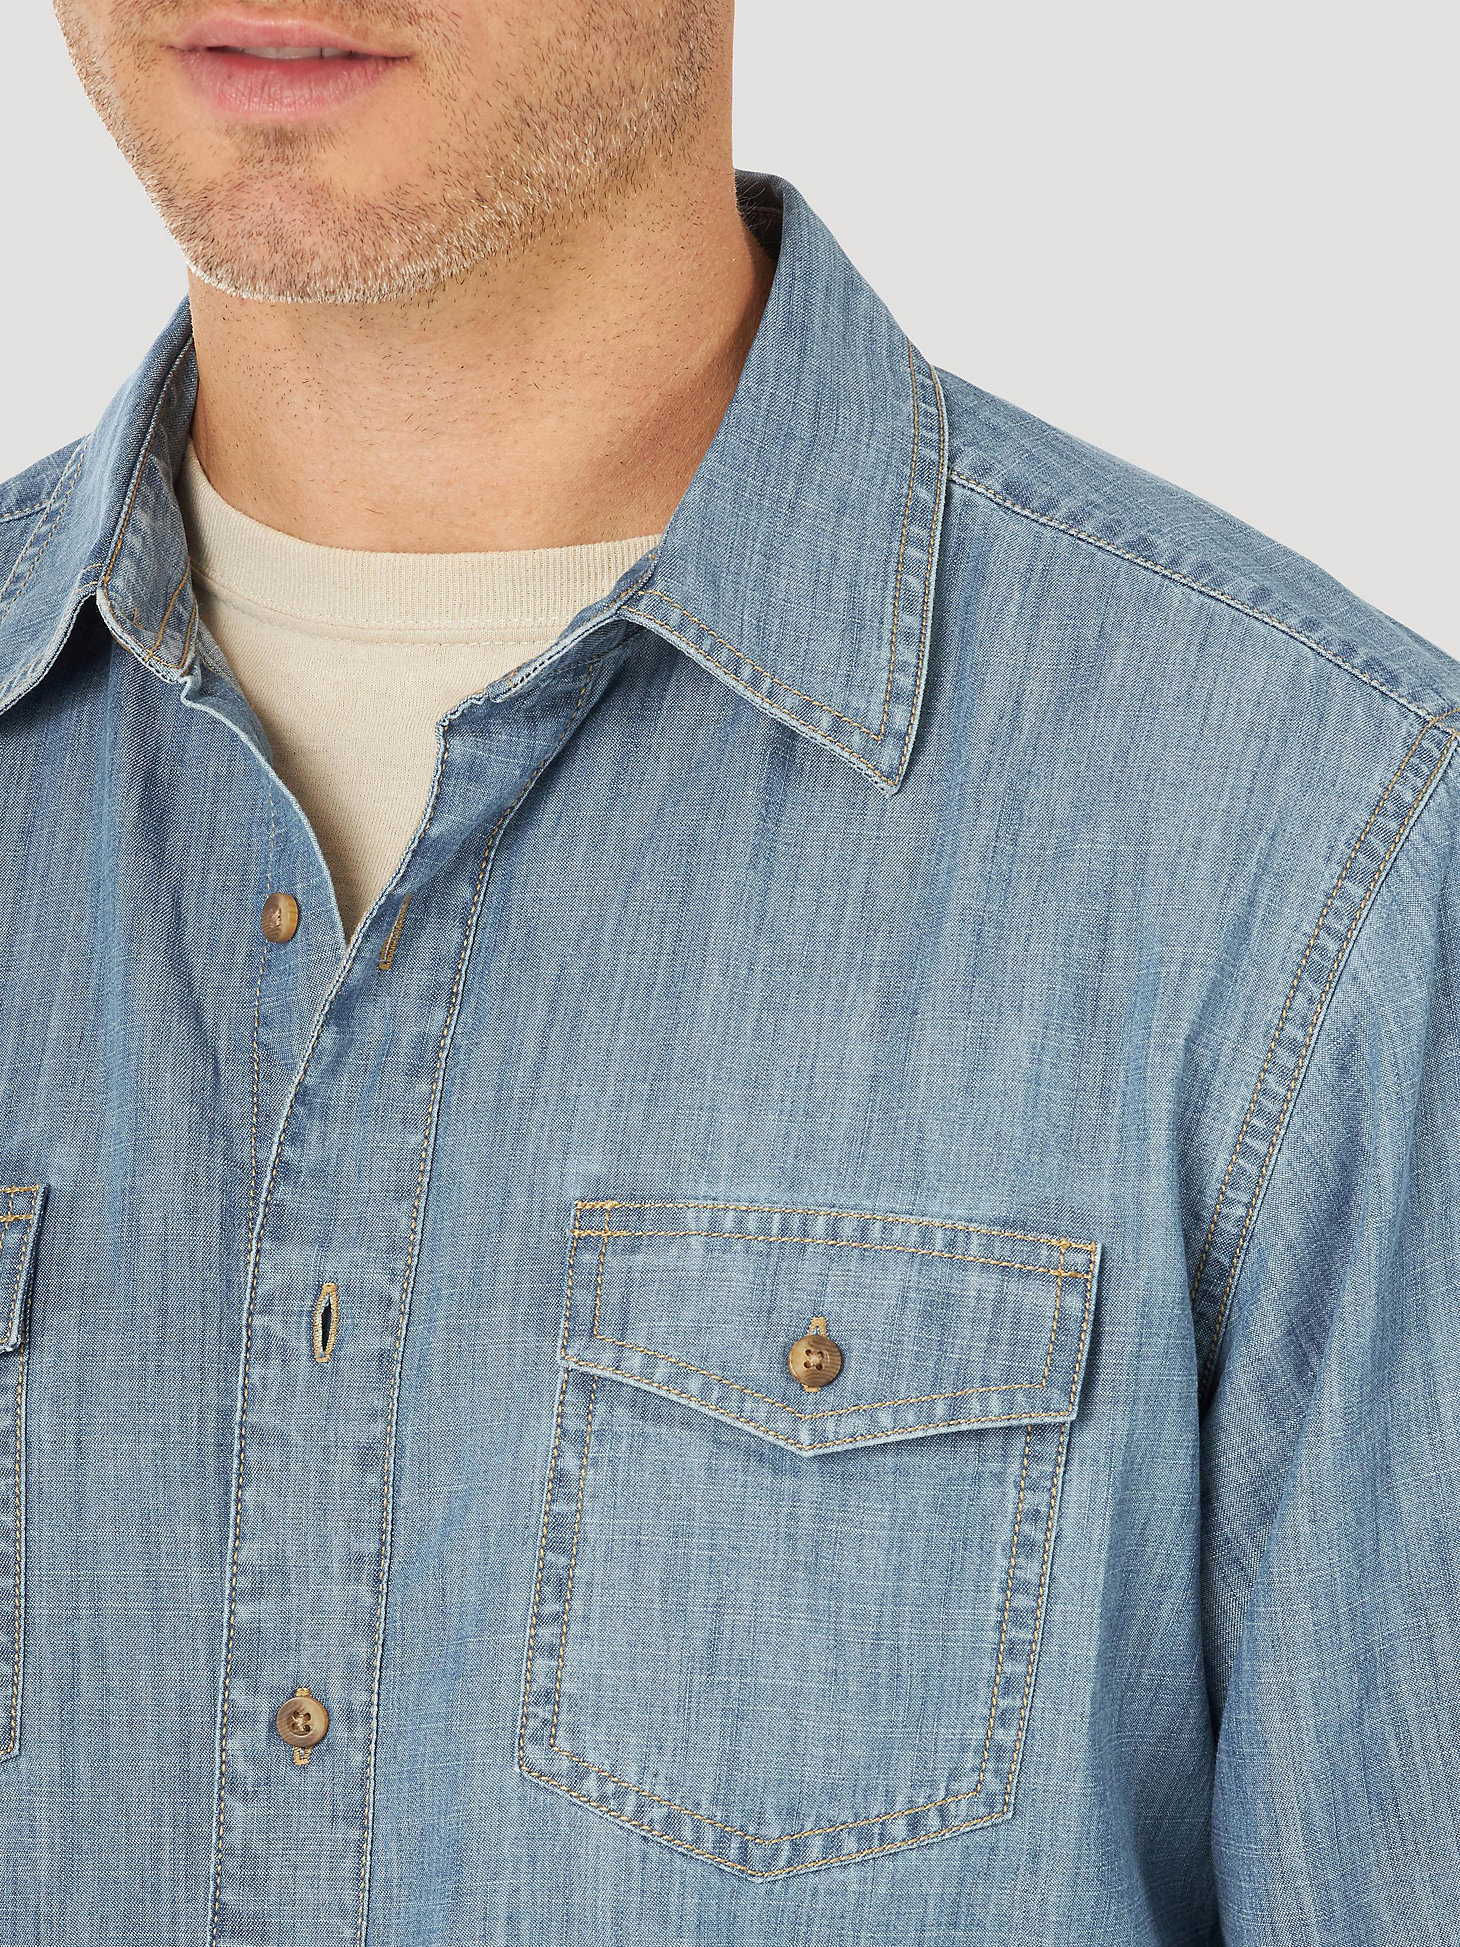 Men's Wrangler Retro® Premium Long Sleeve Button Down Denim Shirt in Denim alternative view 2